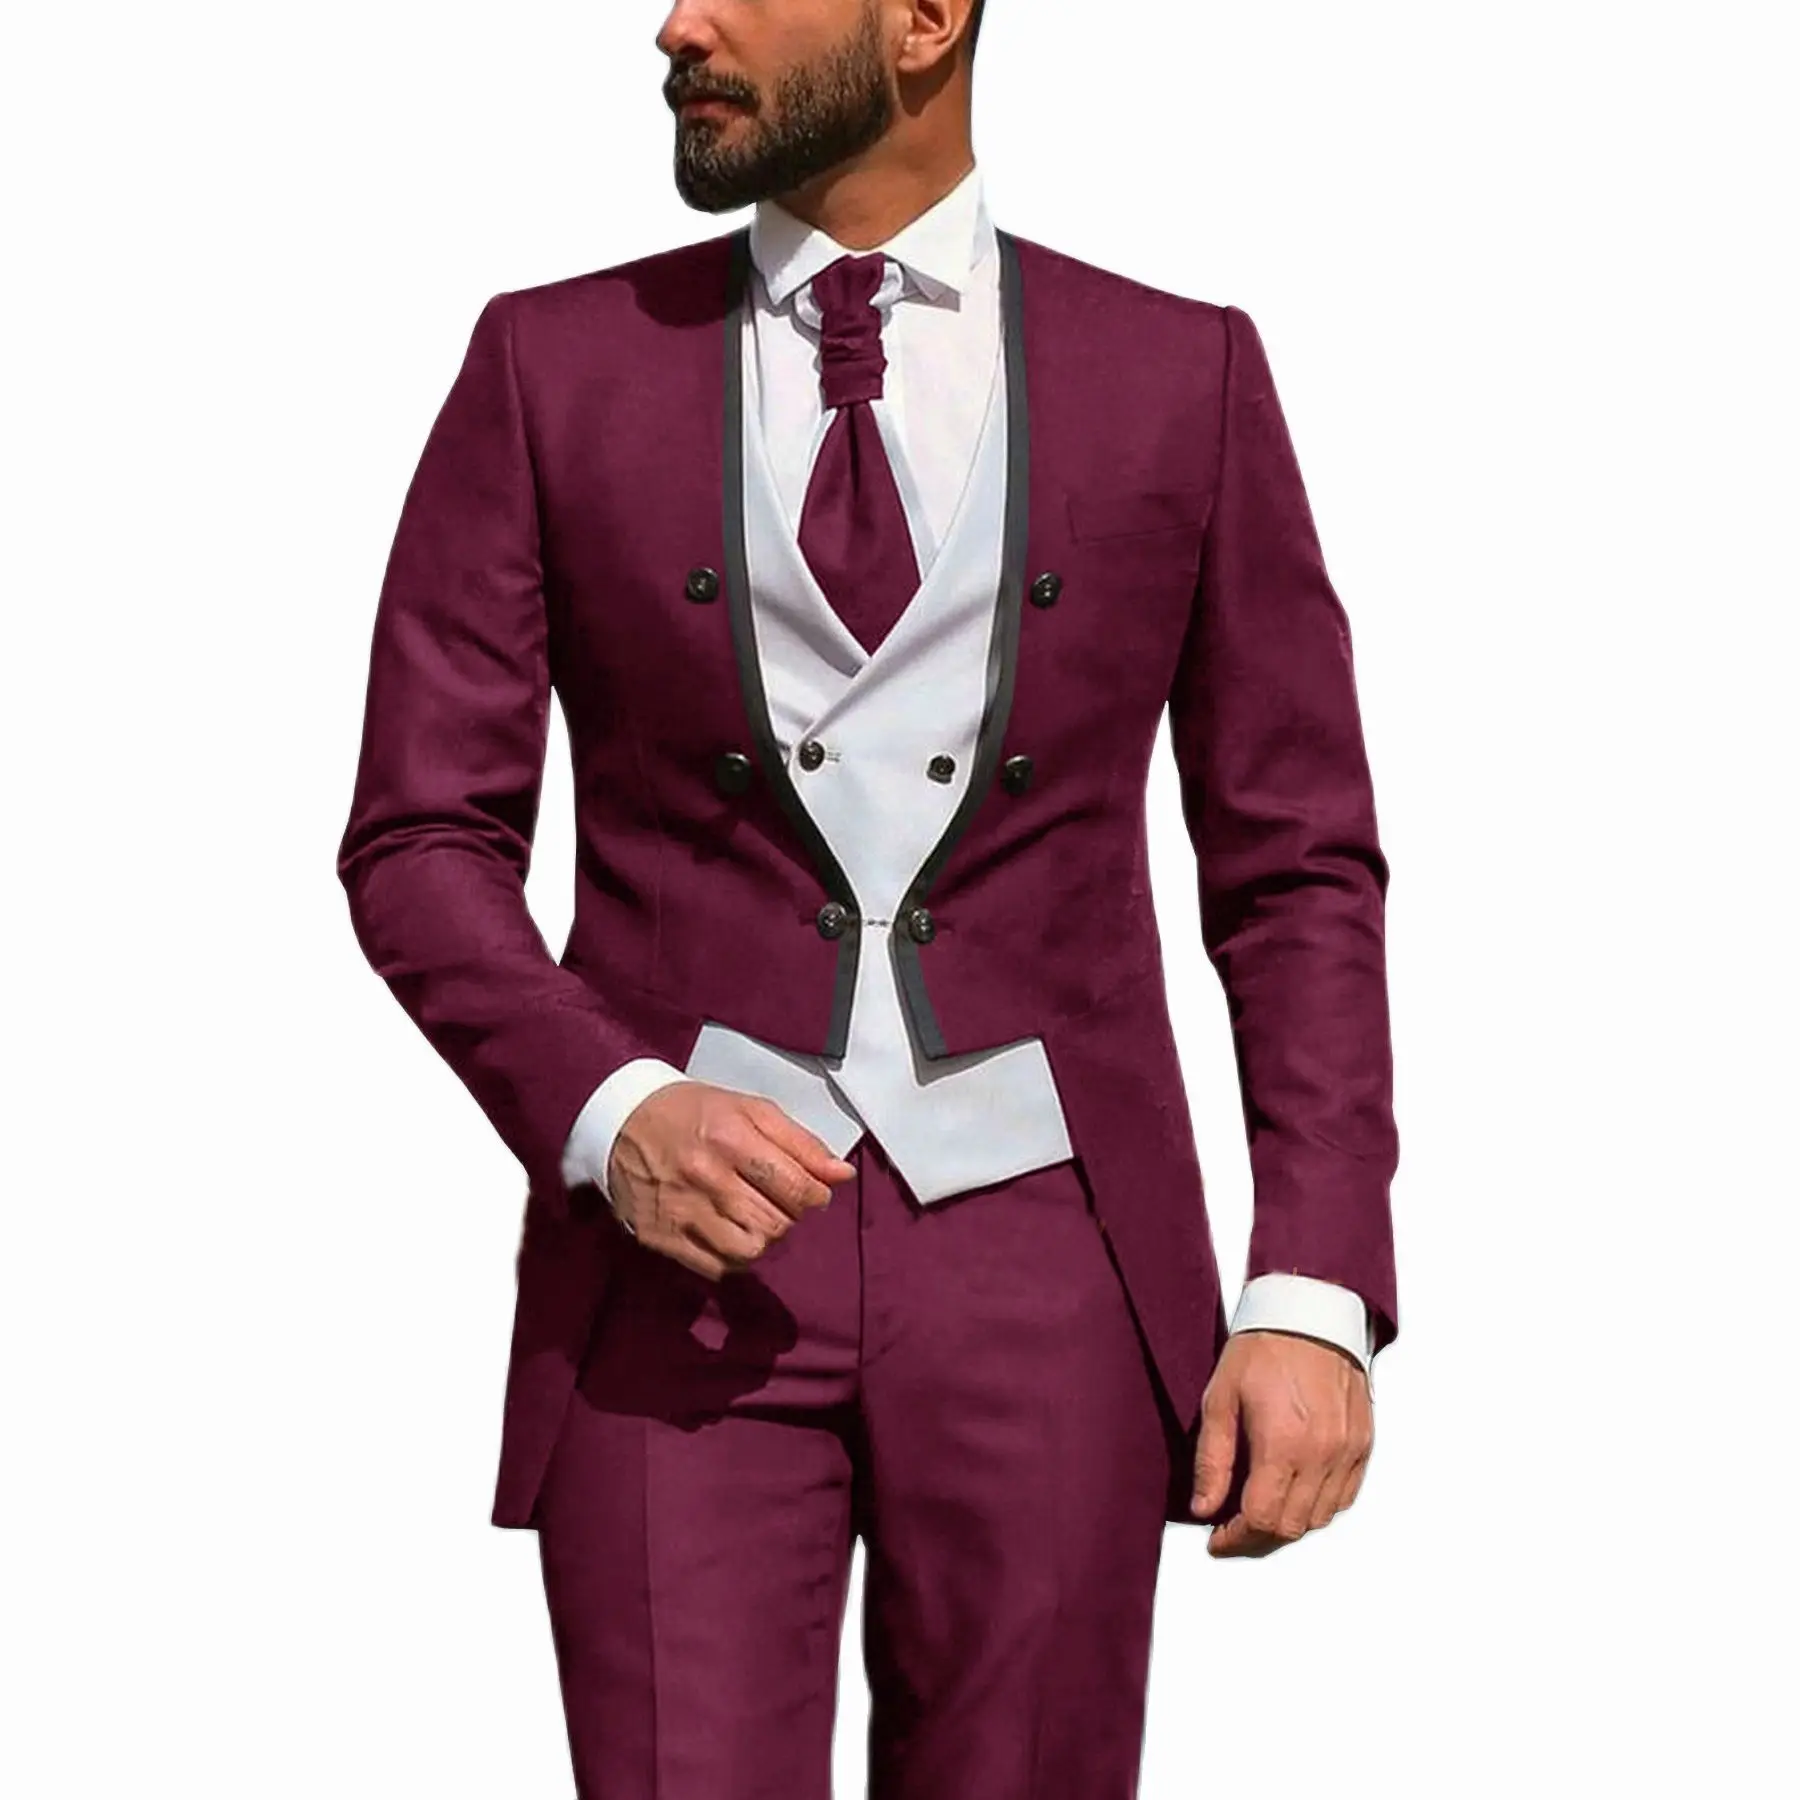 Blazer Sets  New Arrival Formal Dinner Party Tailcoat Burgundy Wedding Suits For Men Groomsman Groom Suits Men's Tuxedo 3 Pieces